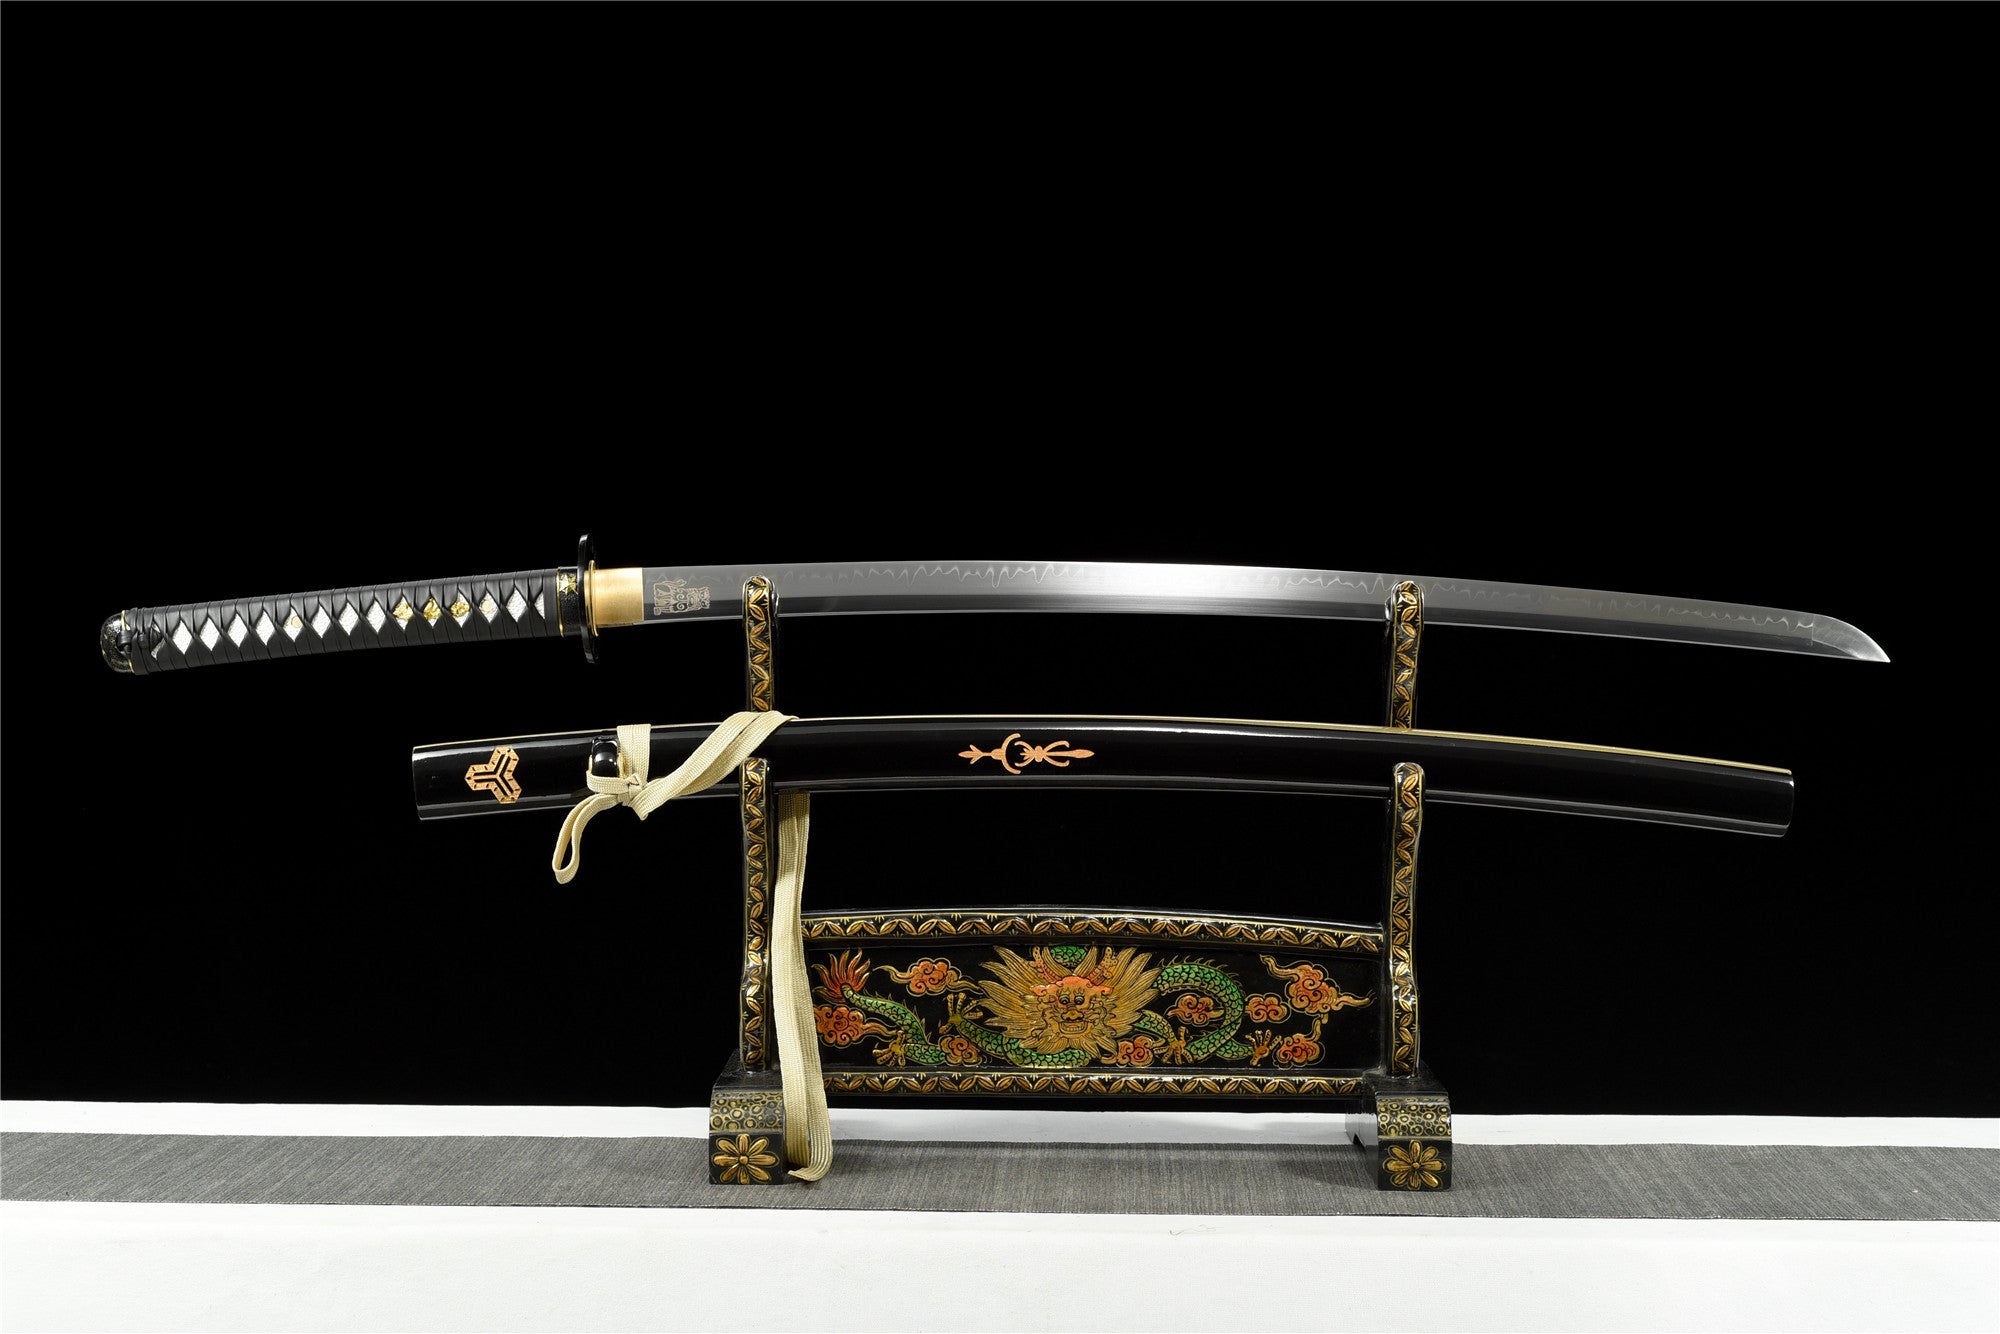 Black Katana,Kill Bill,Real Japanese Samurai Sword,Handmade Razor Sharp Katana Swords,Full Tang